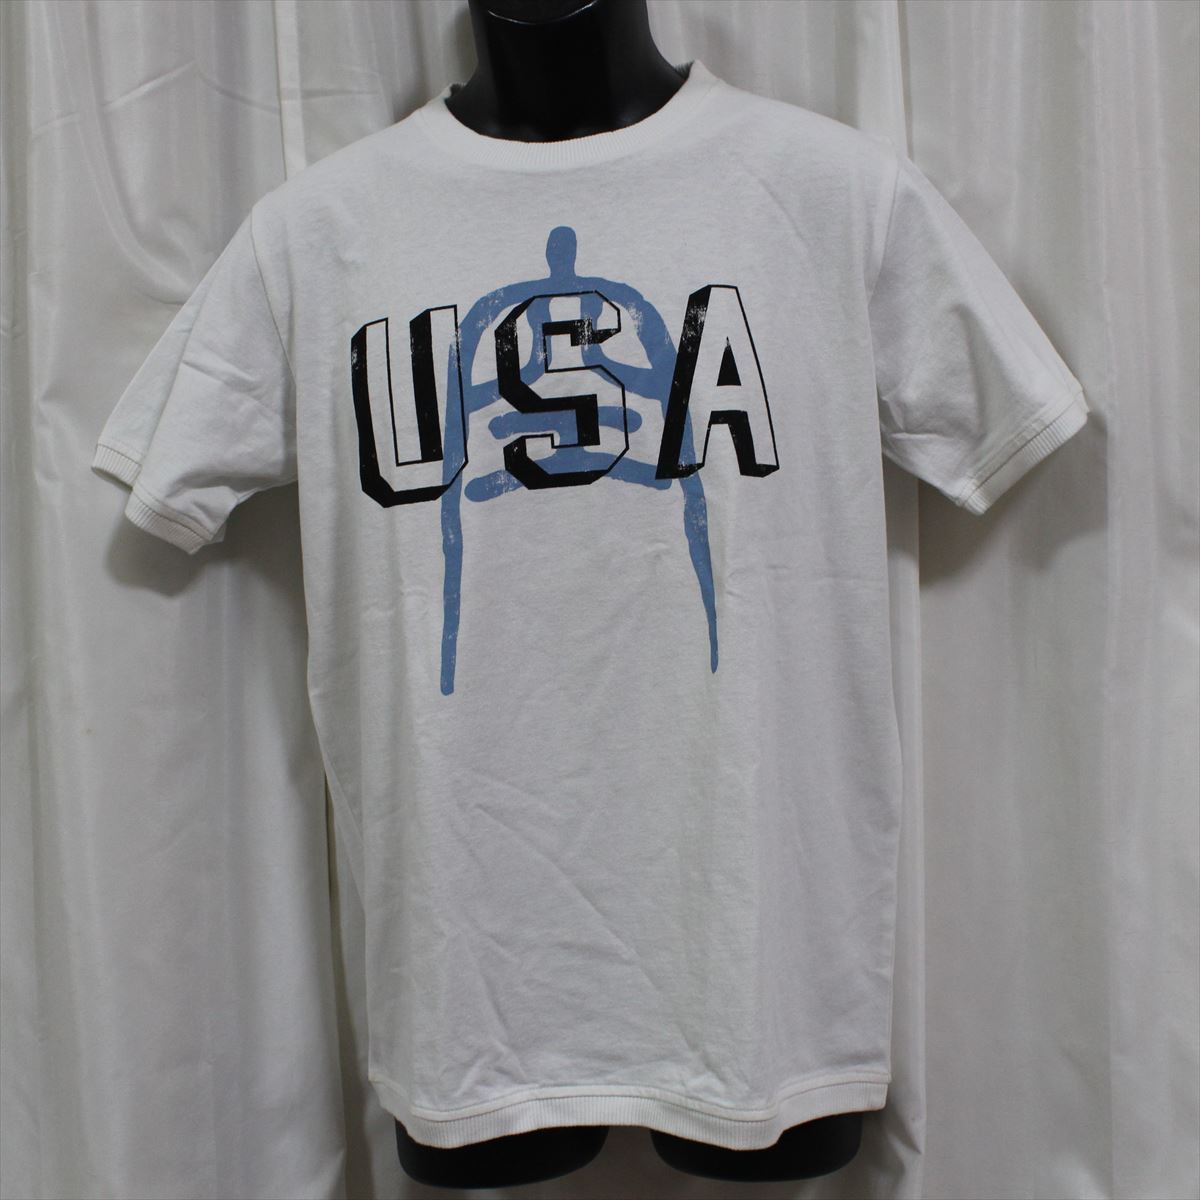 KU USA 空 メンズ 半袖Tシャツ ホワイト Mサイズ 新品 白_画像1